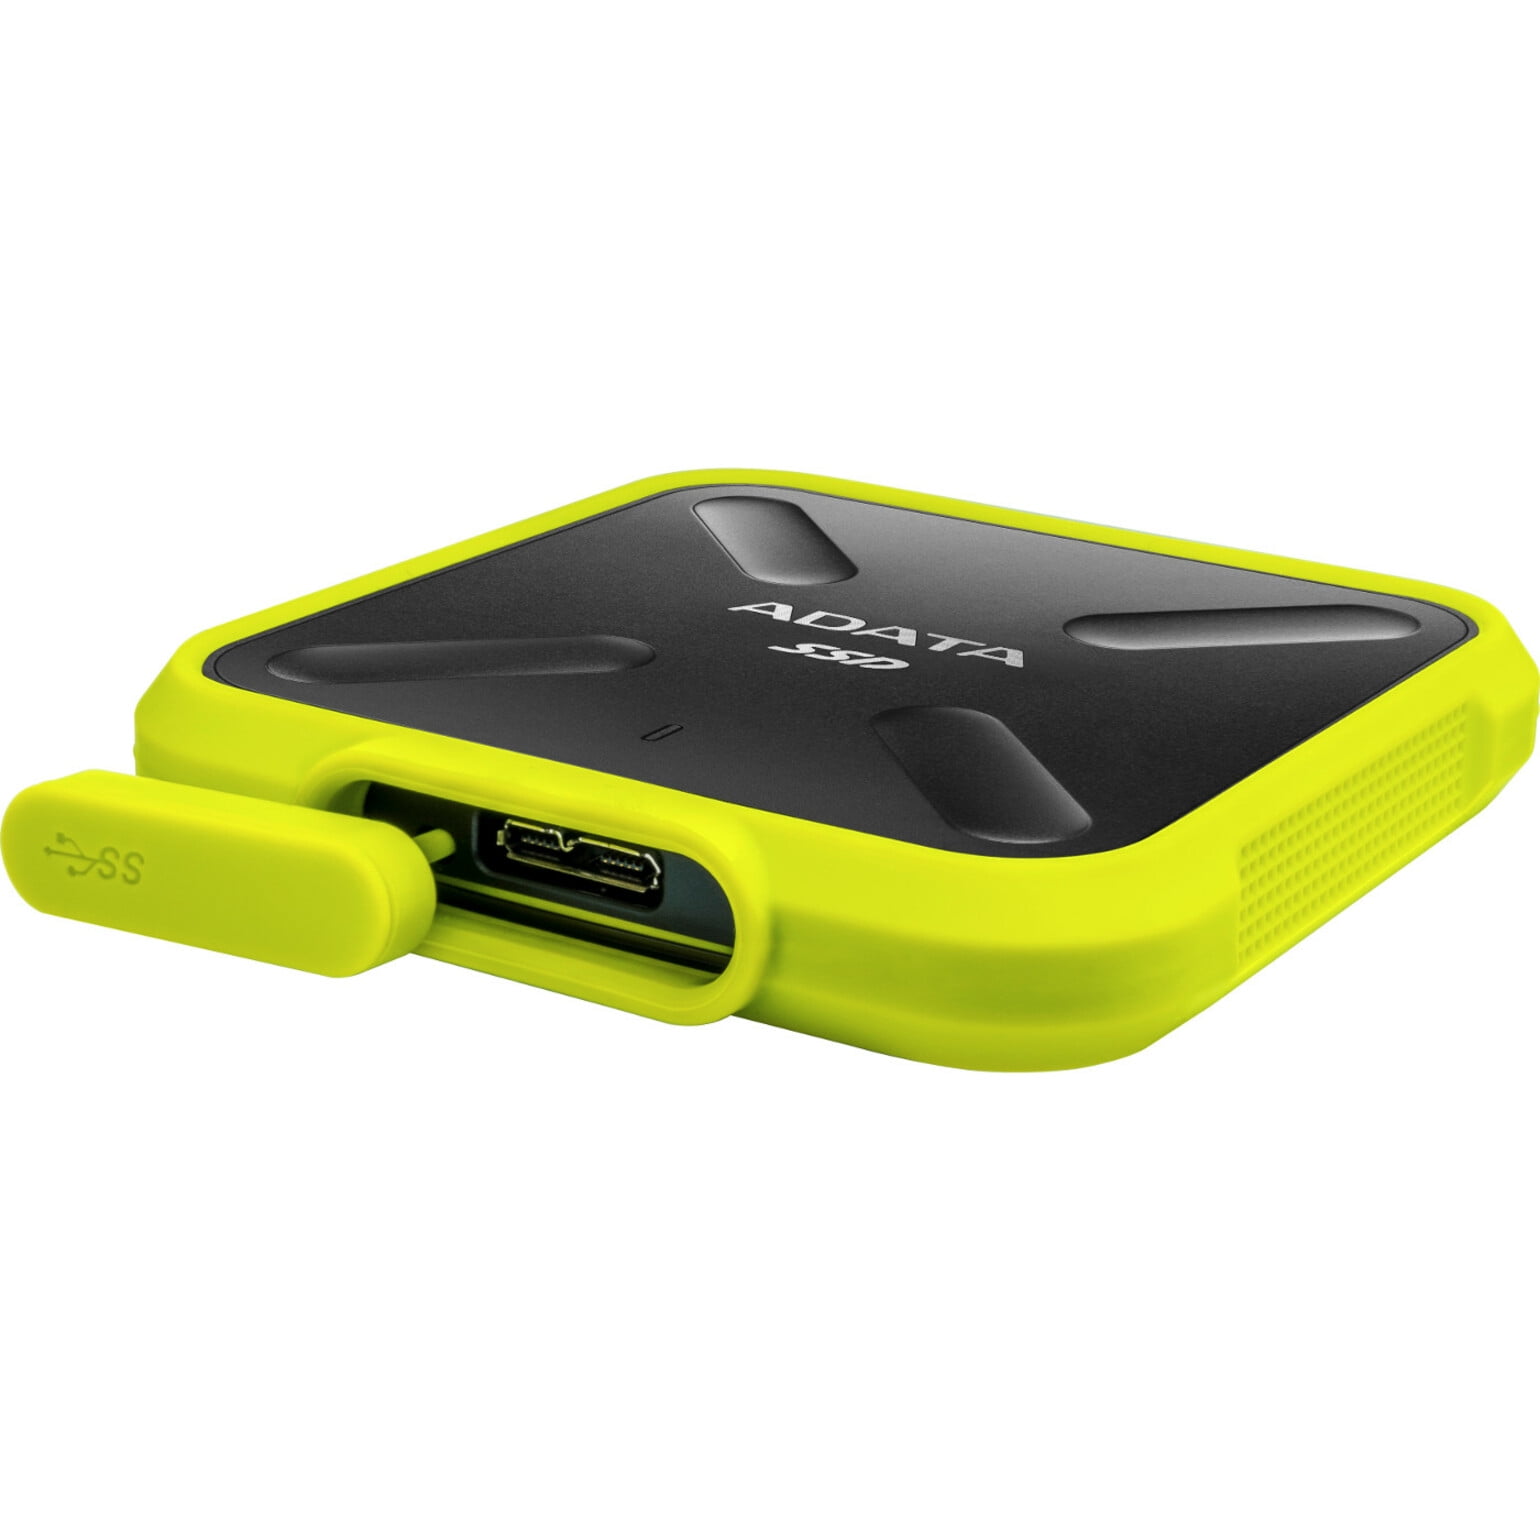 Adata SD700 ASD700-1TU31-CYL 1 TB Portable Solid State Drive, External, Yellow -